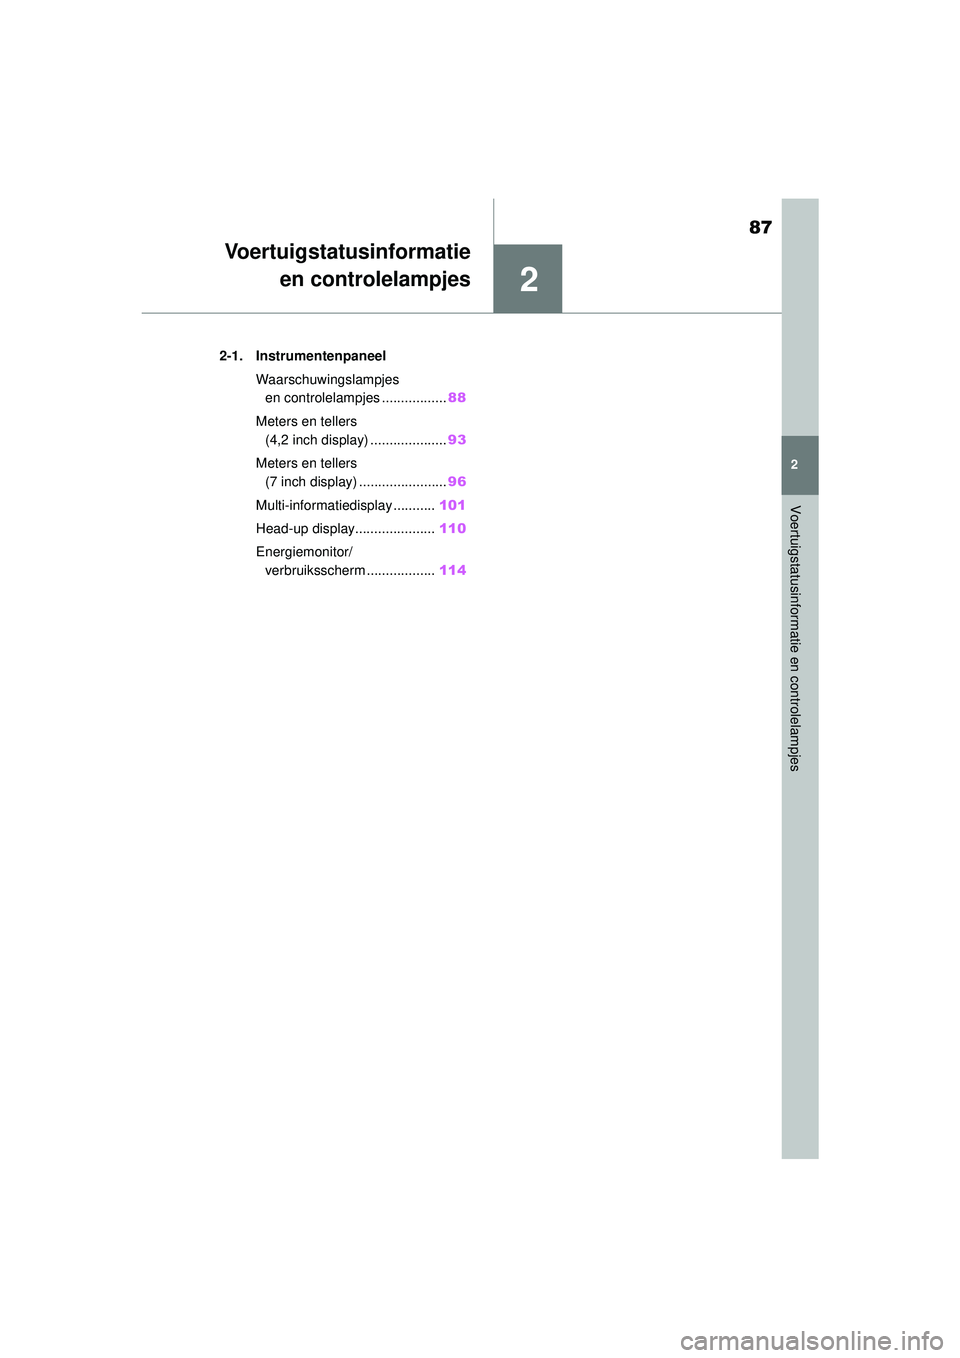 TOYOTA COROLLA 2022  Instructieboekje (in Dutch) 2
87
2
Voertuigstatusinformatie en controlelampjes
Voertuigstatusinformatieen controlelampjes
.2-1. Instrumentenpaneel
Waarschuwingslampjes en controlelampjes ................. 88
Meters en tellers  (